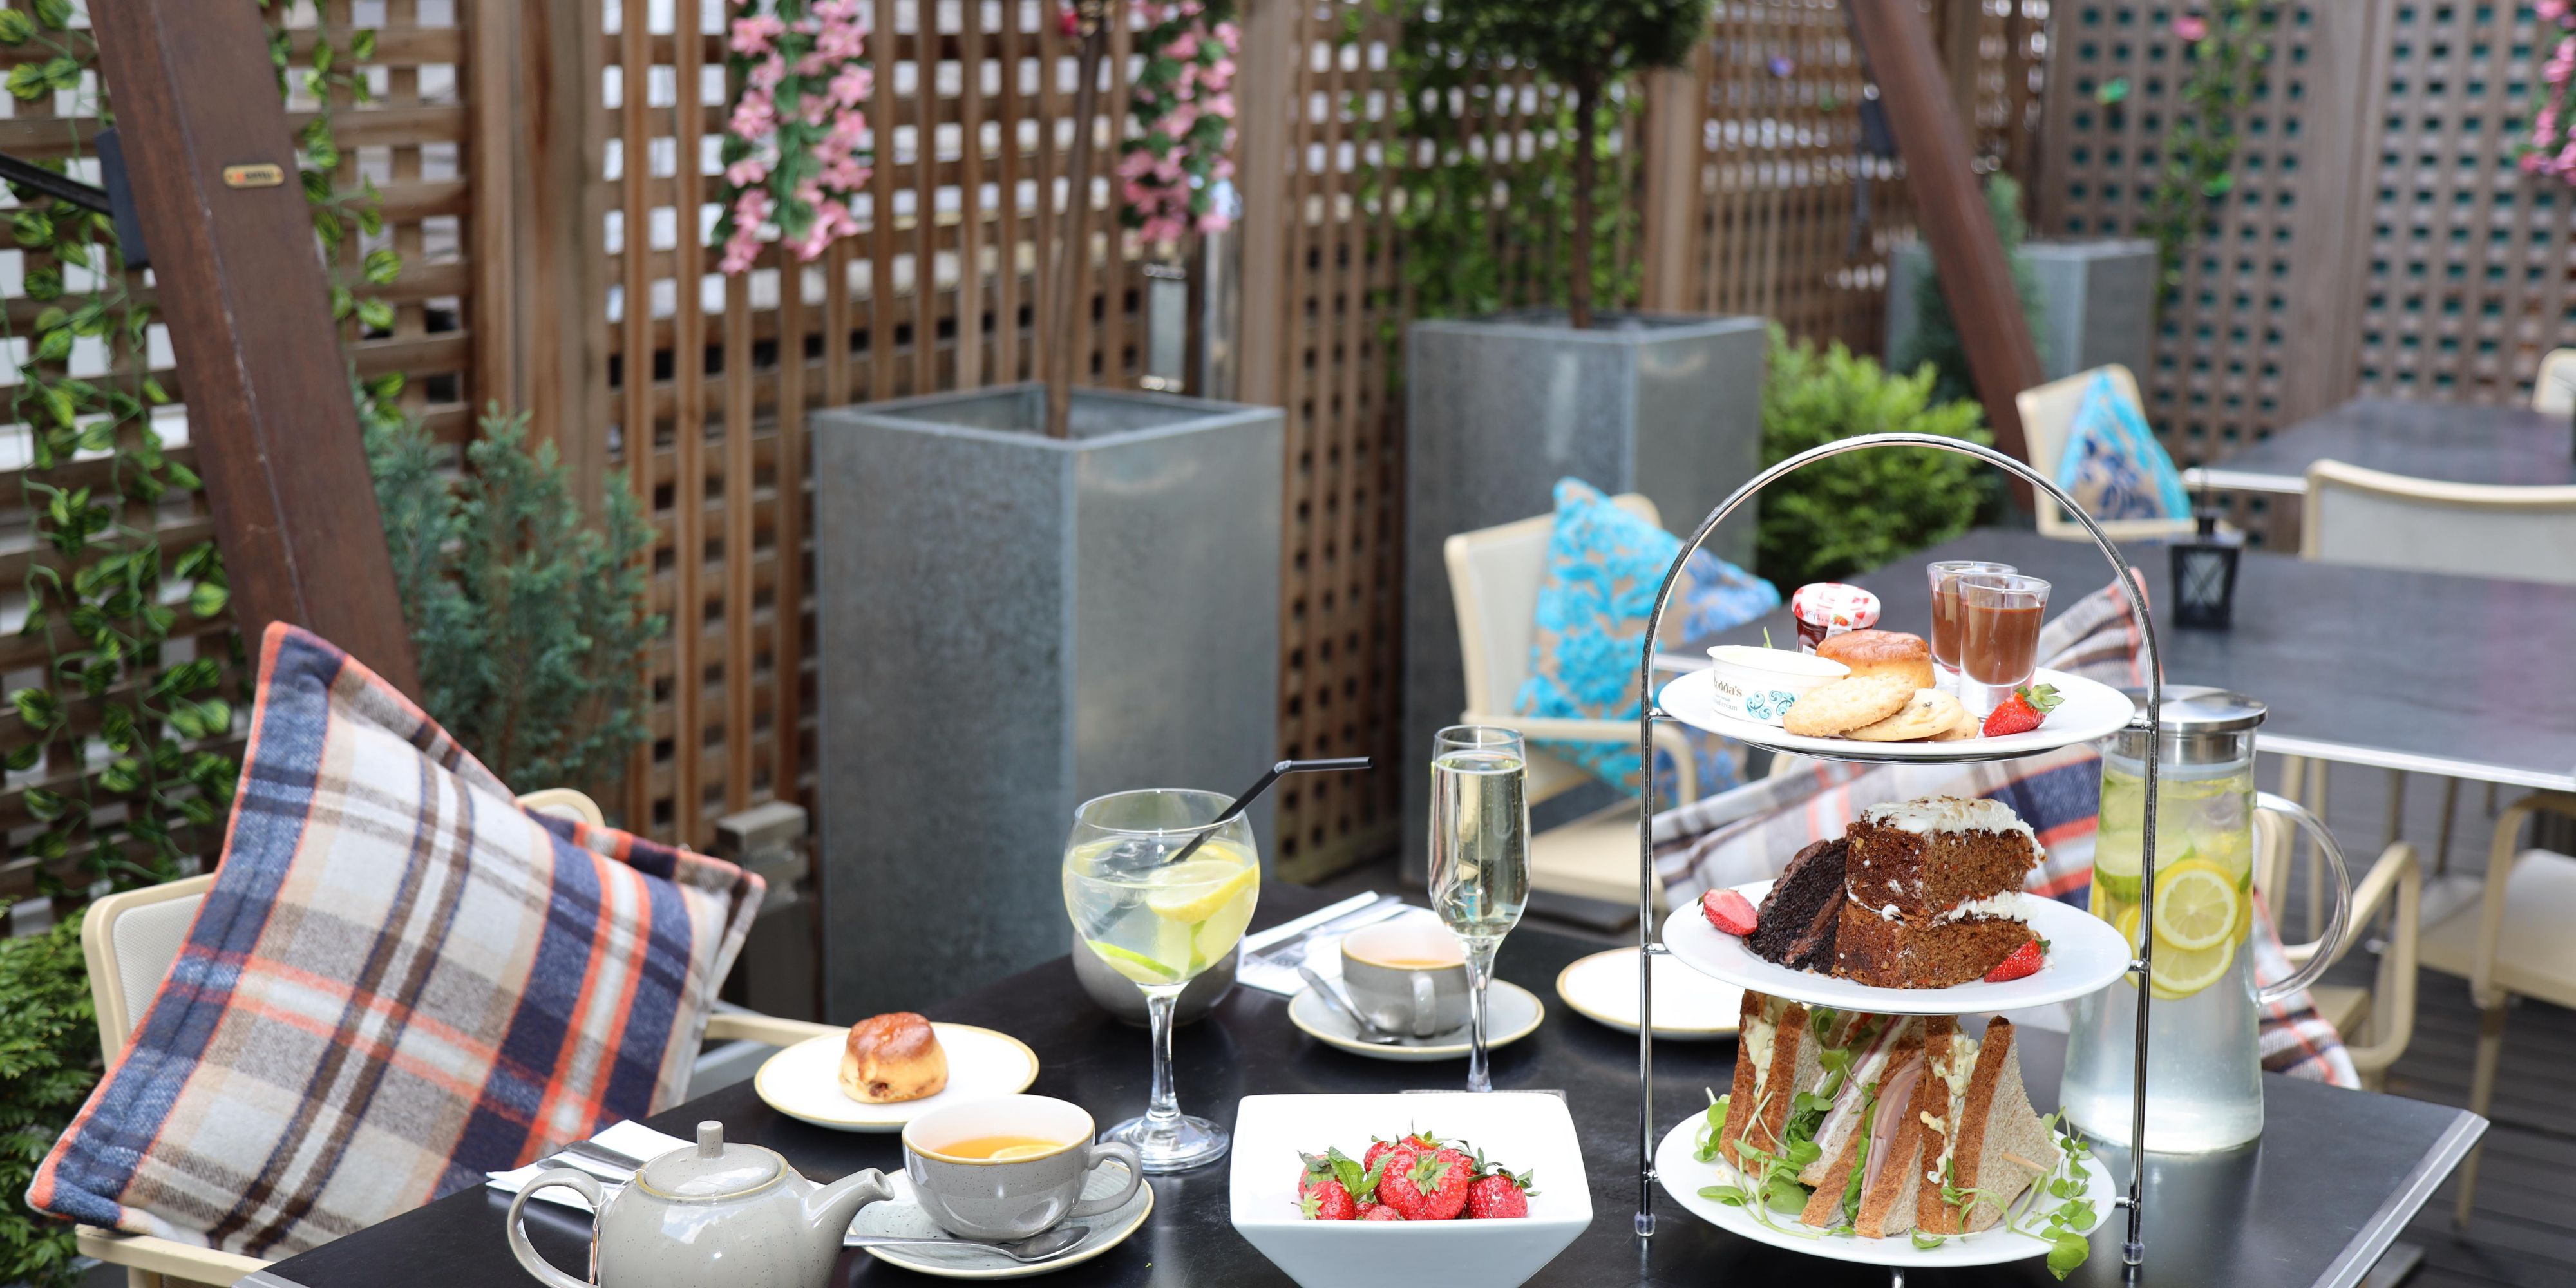 Enjoy Afternoon Tea on our Garden Terrace